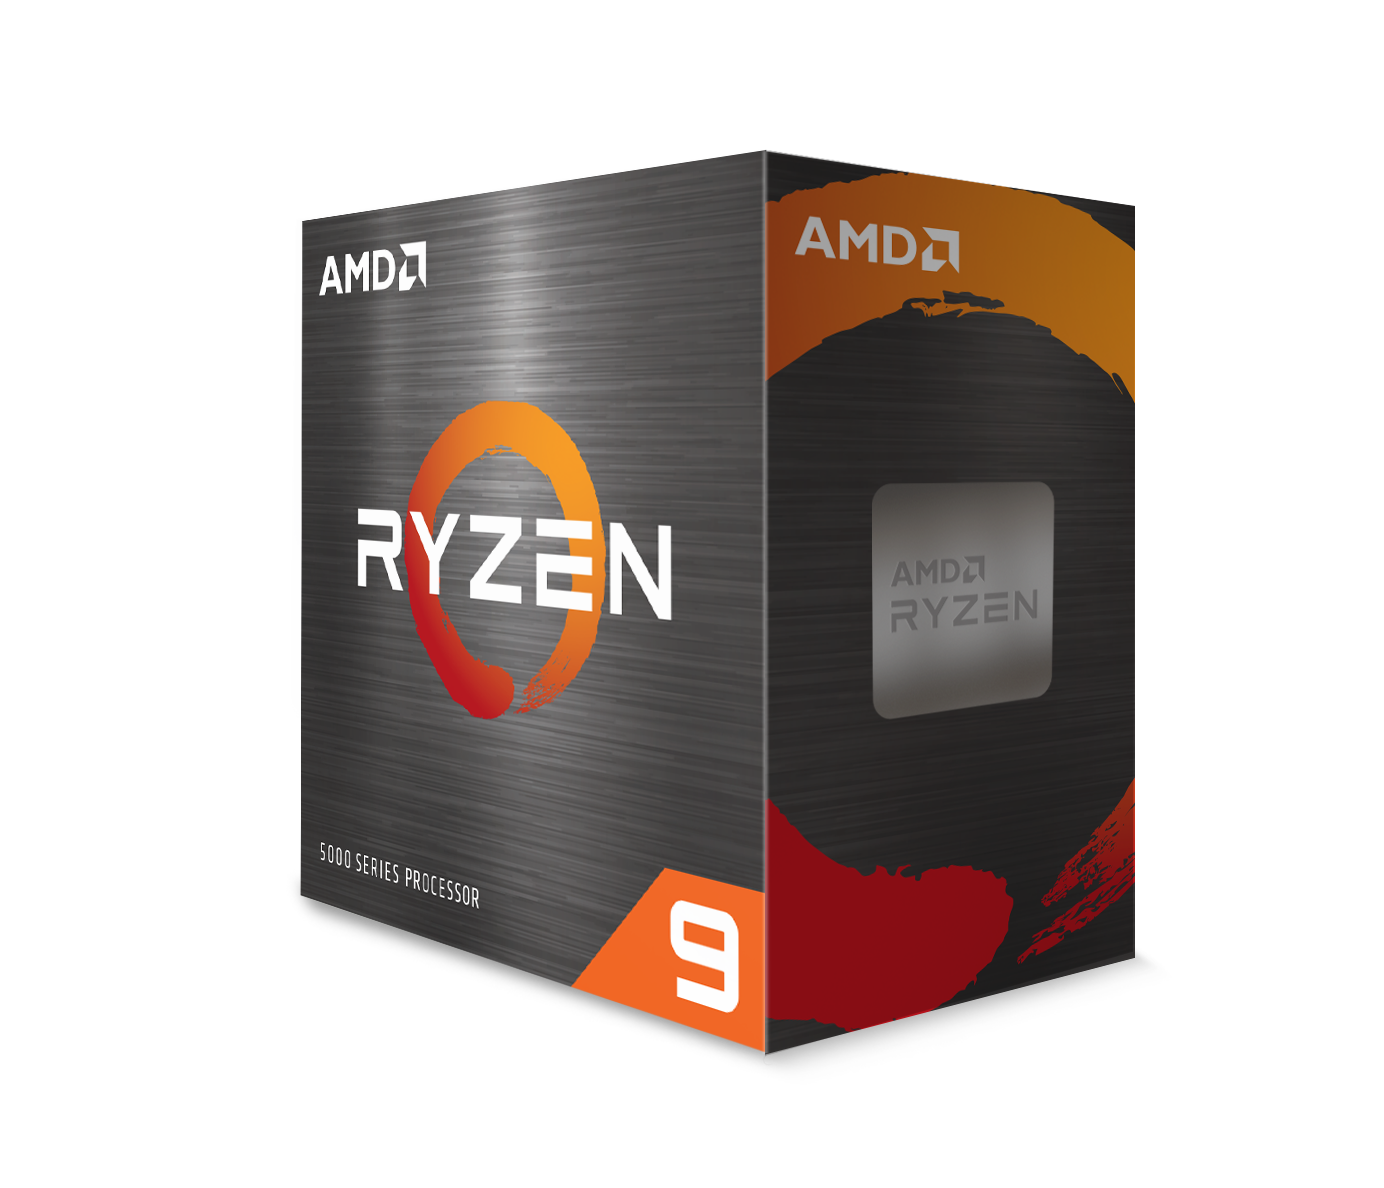 AMDプロセッサー - 株式会社アドテック